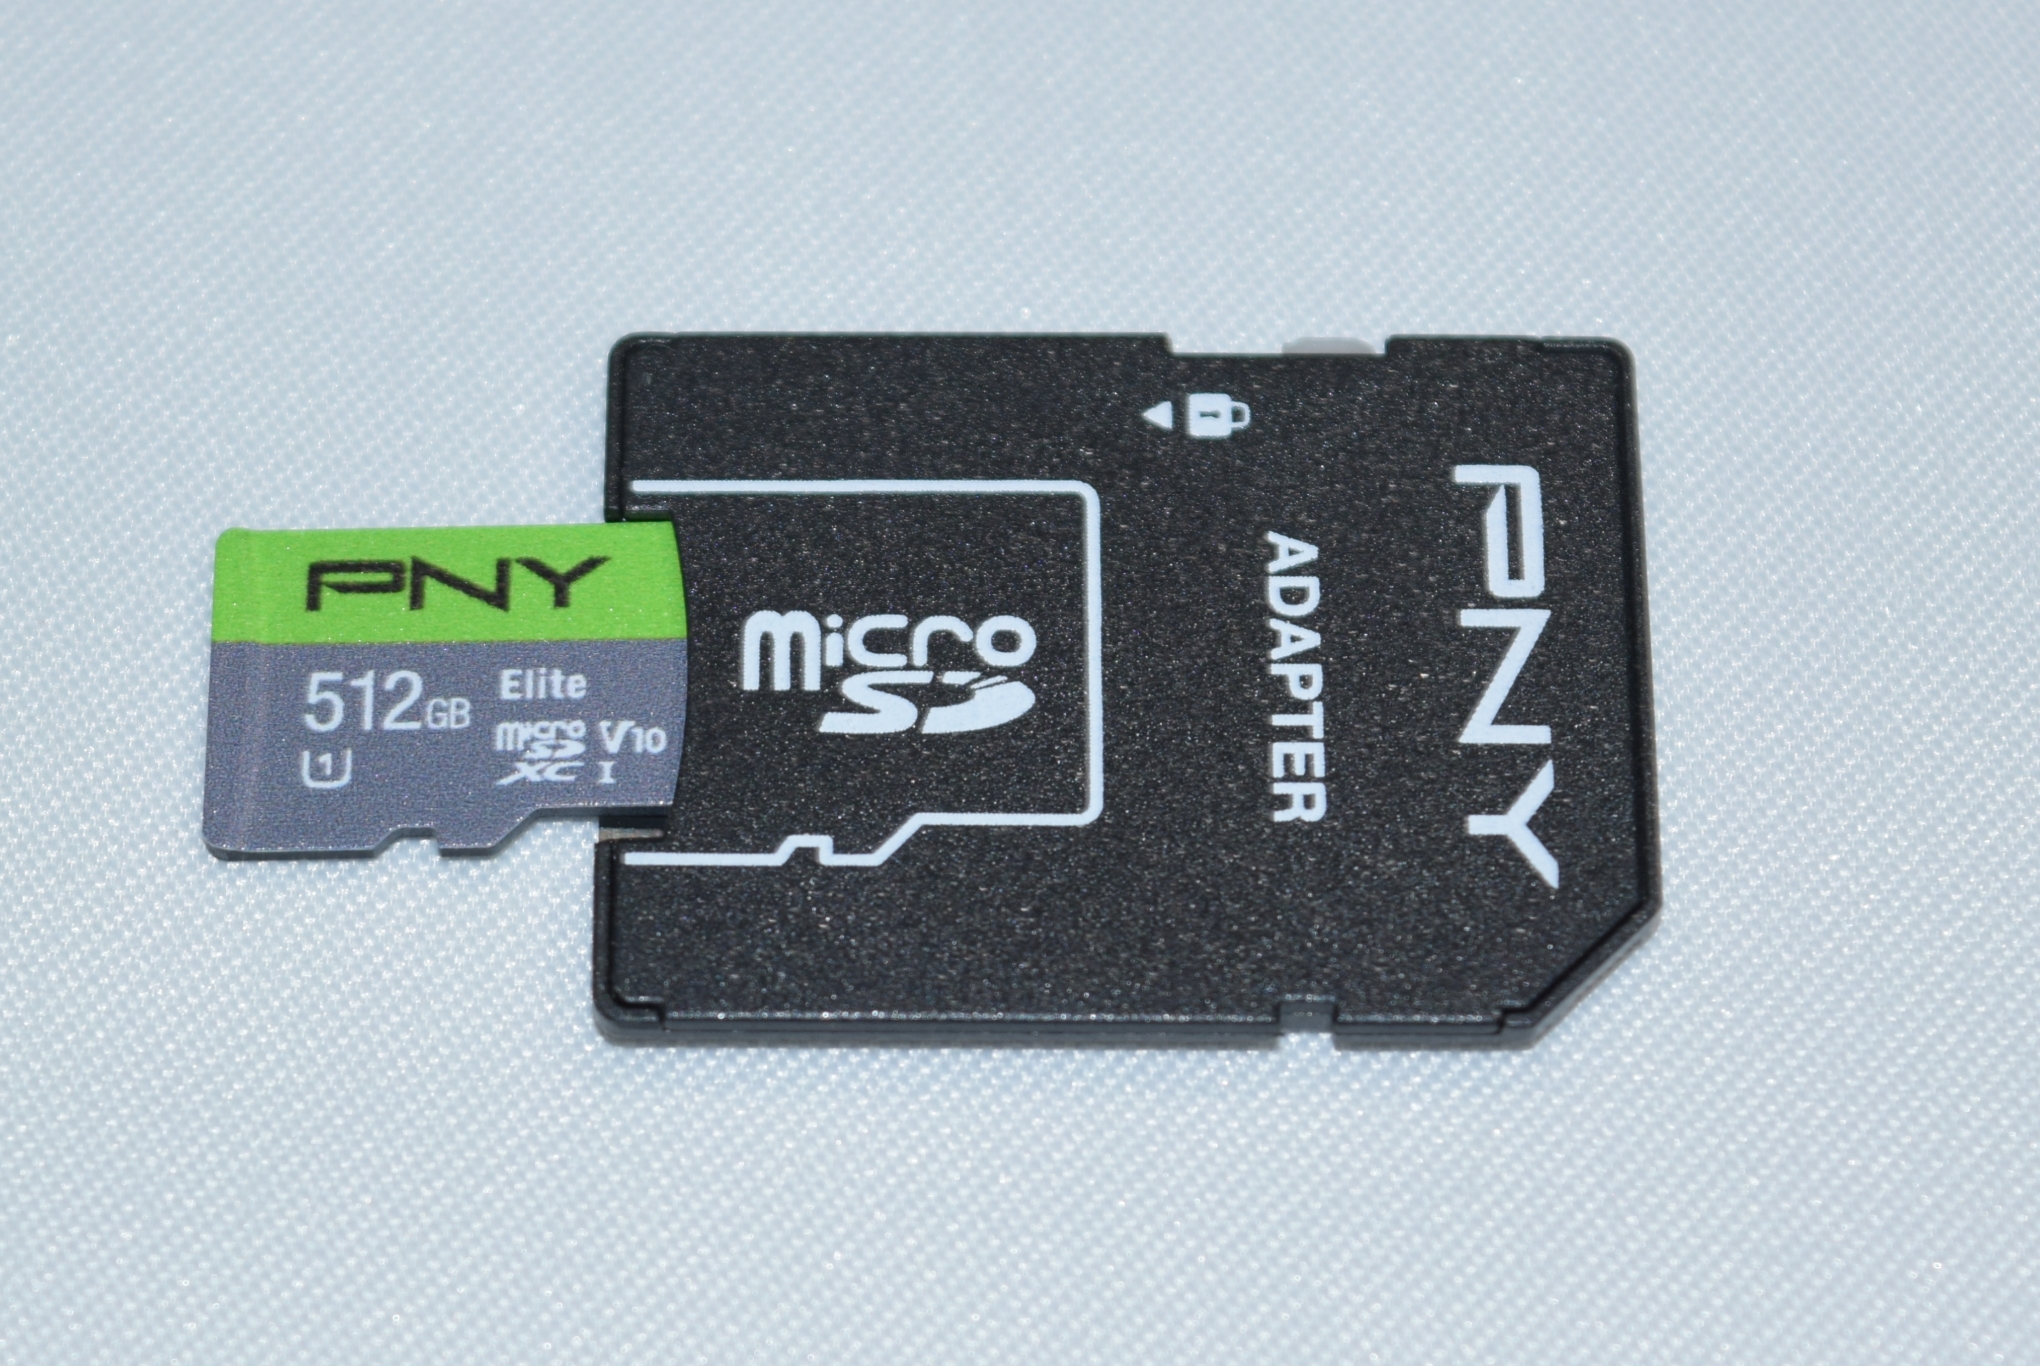 PNY Elite microSDXC UHS-I 512GB Memory Card Capsule Review